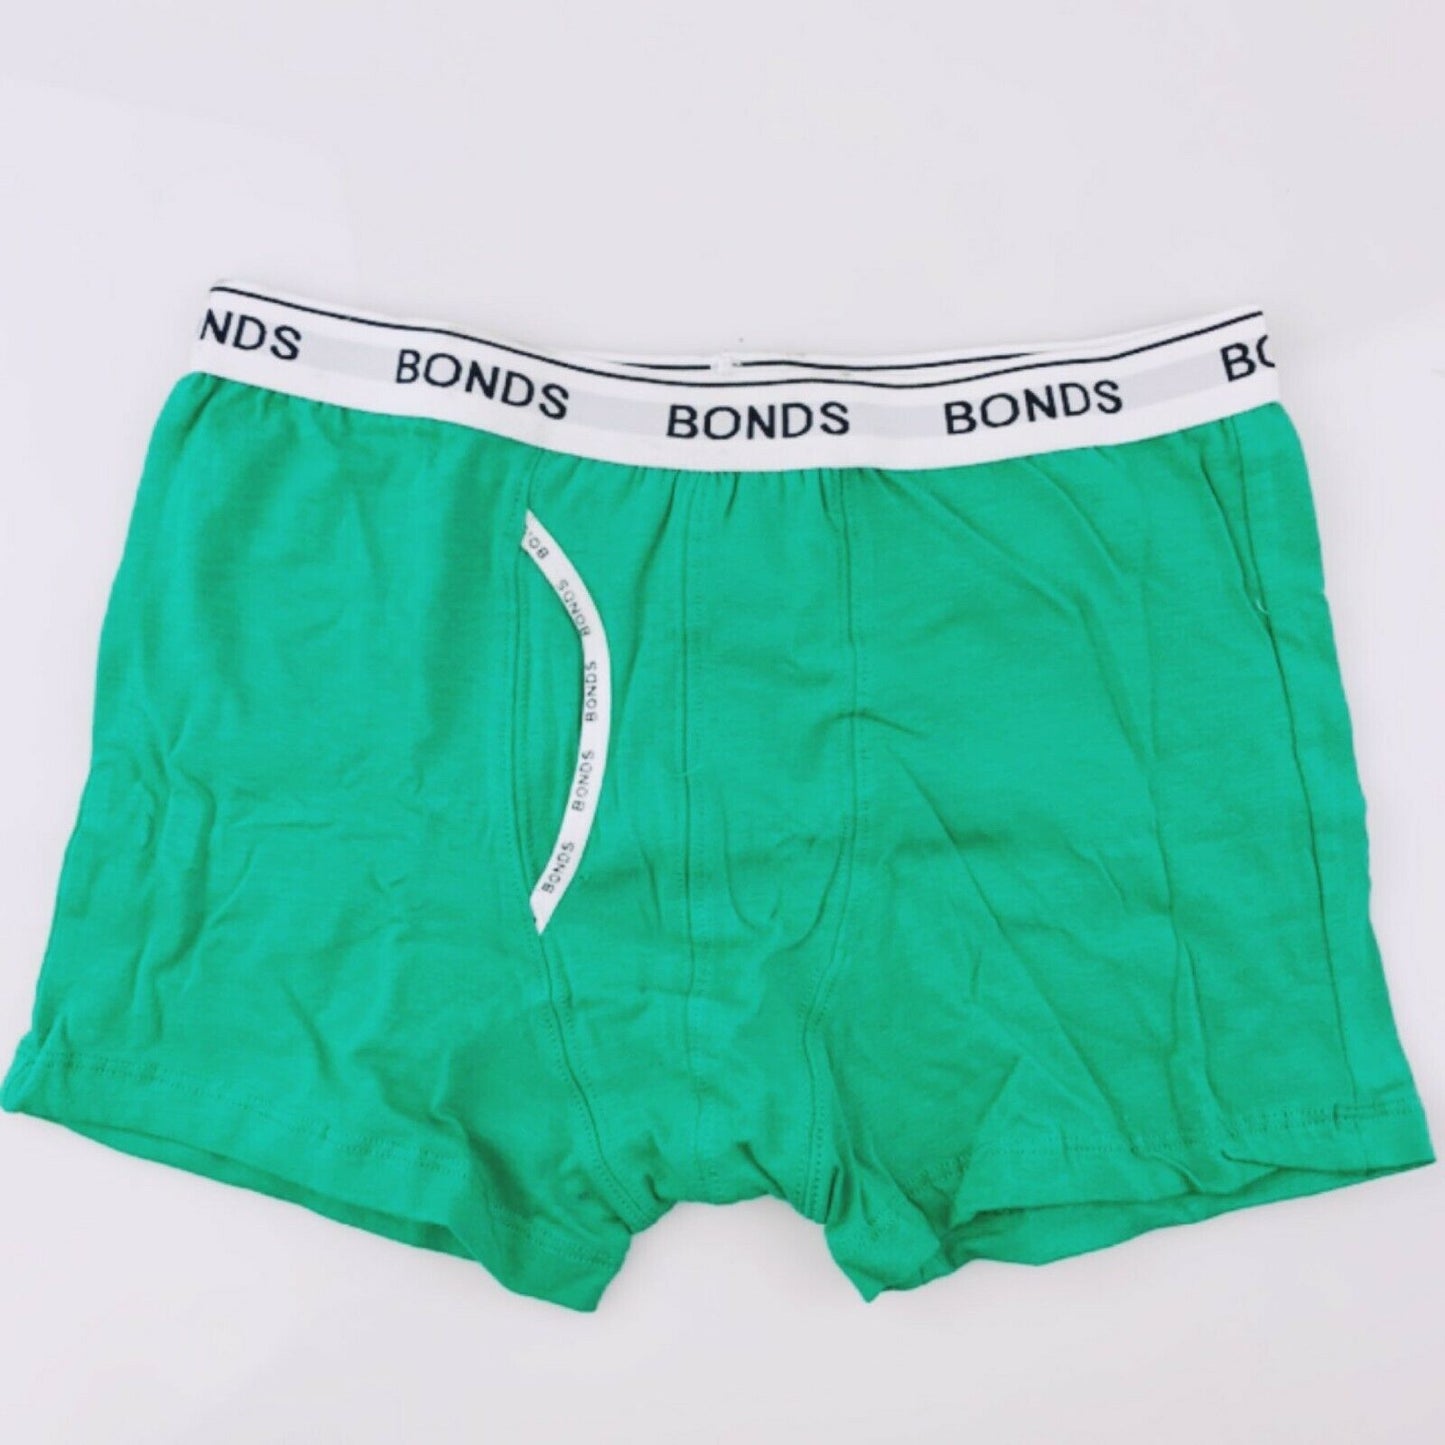 2 x Pairs Bonds Boys Guyfront Trunks Underwear Teen Teens Jocks Shorts Green Blue